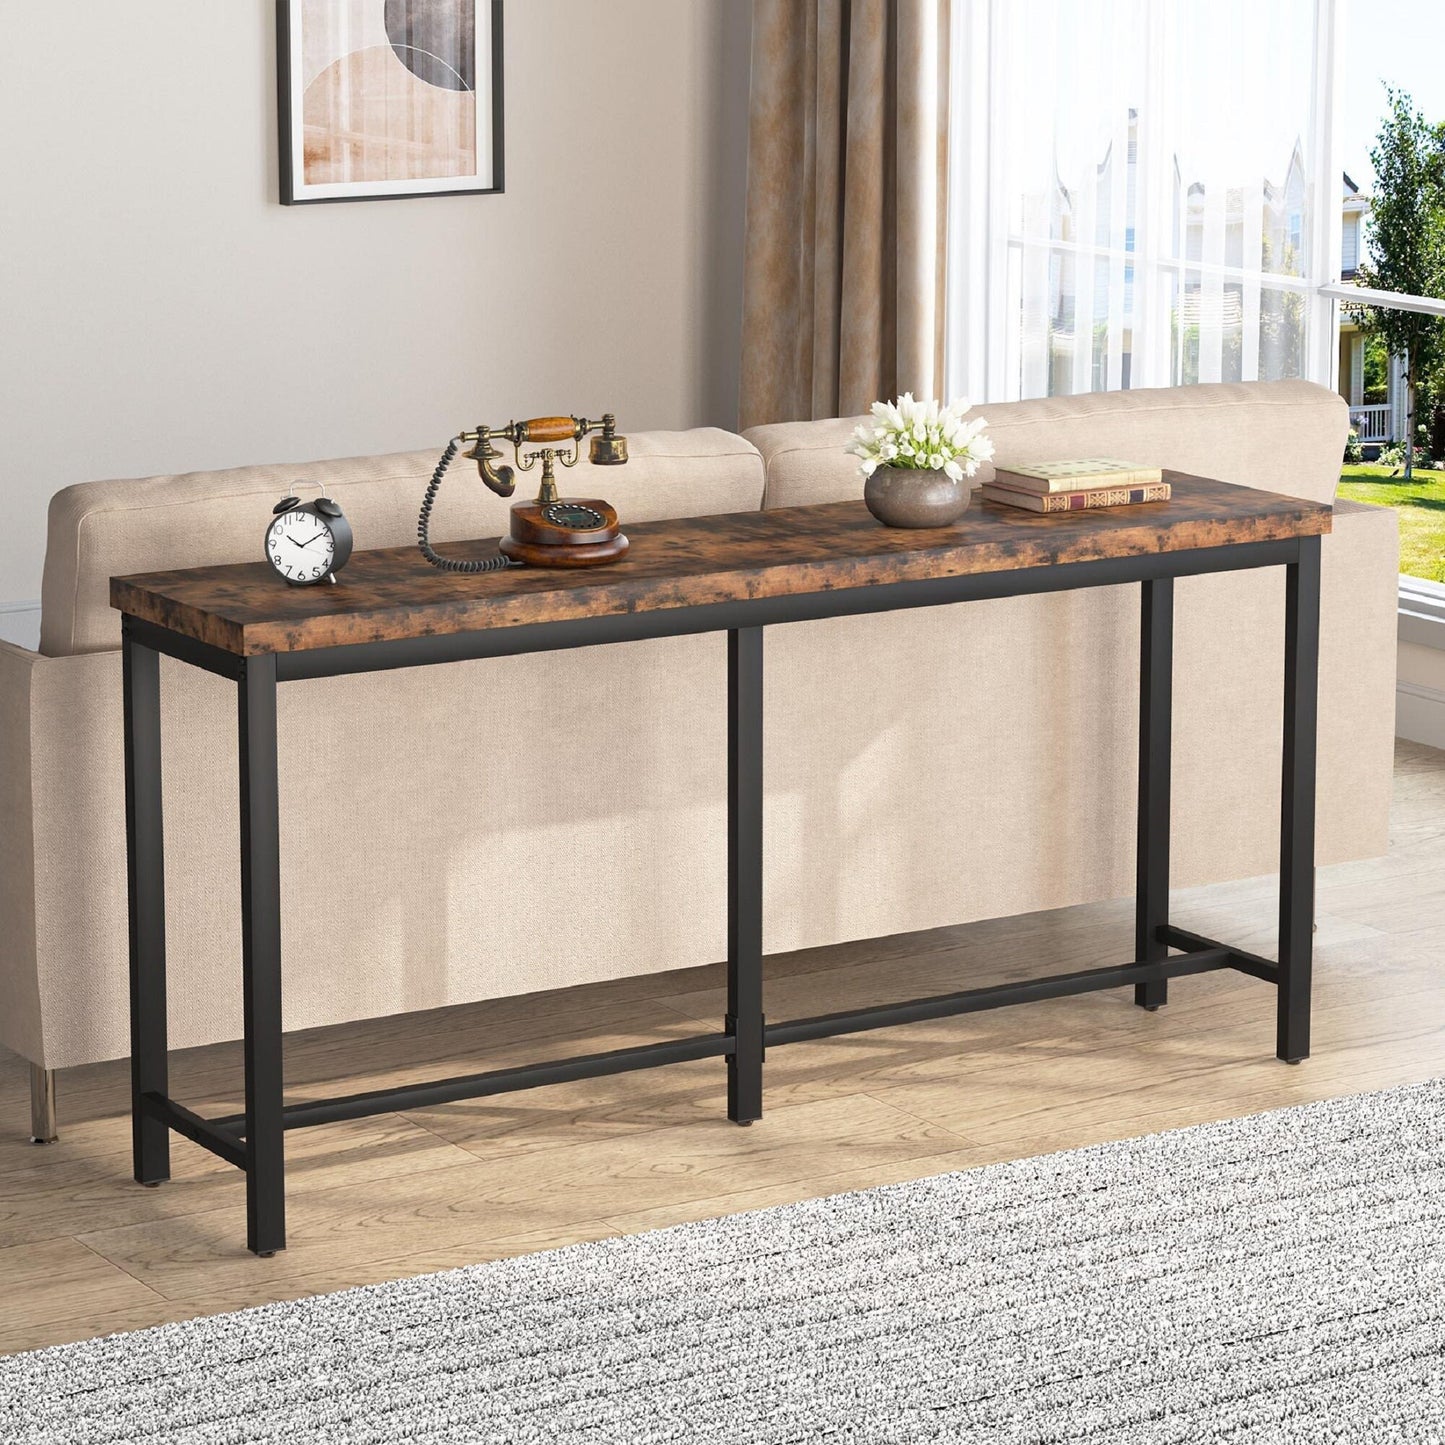 70.9 inch Extra Long Sofa Console Table, Narrow Entryway Table